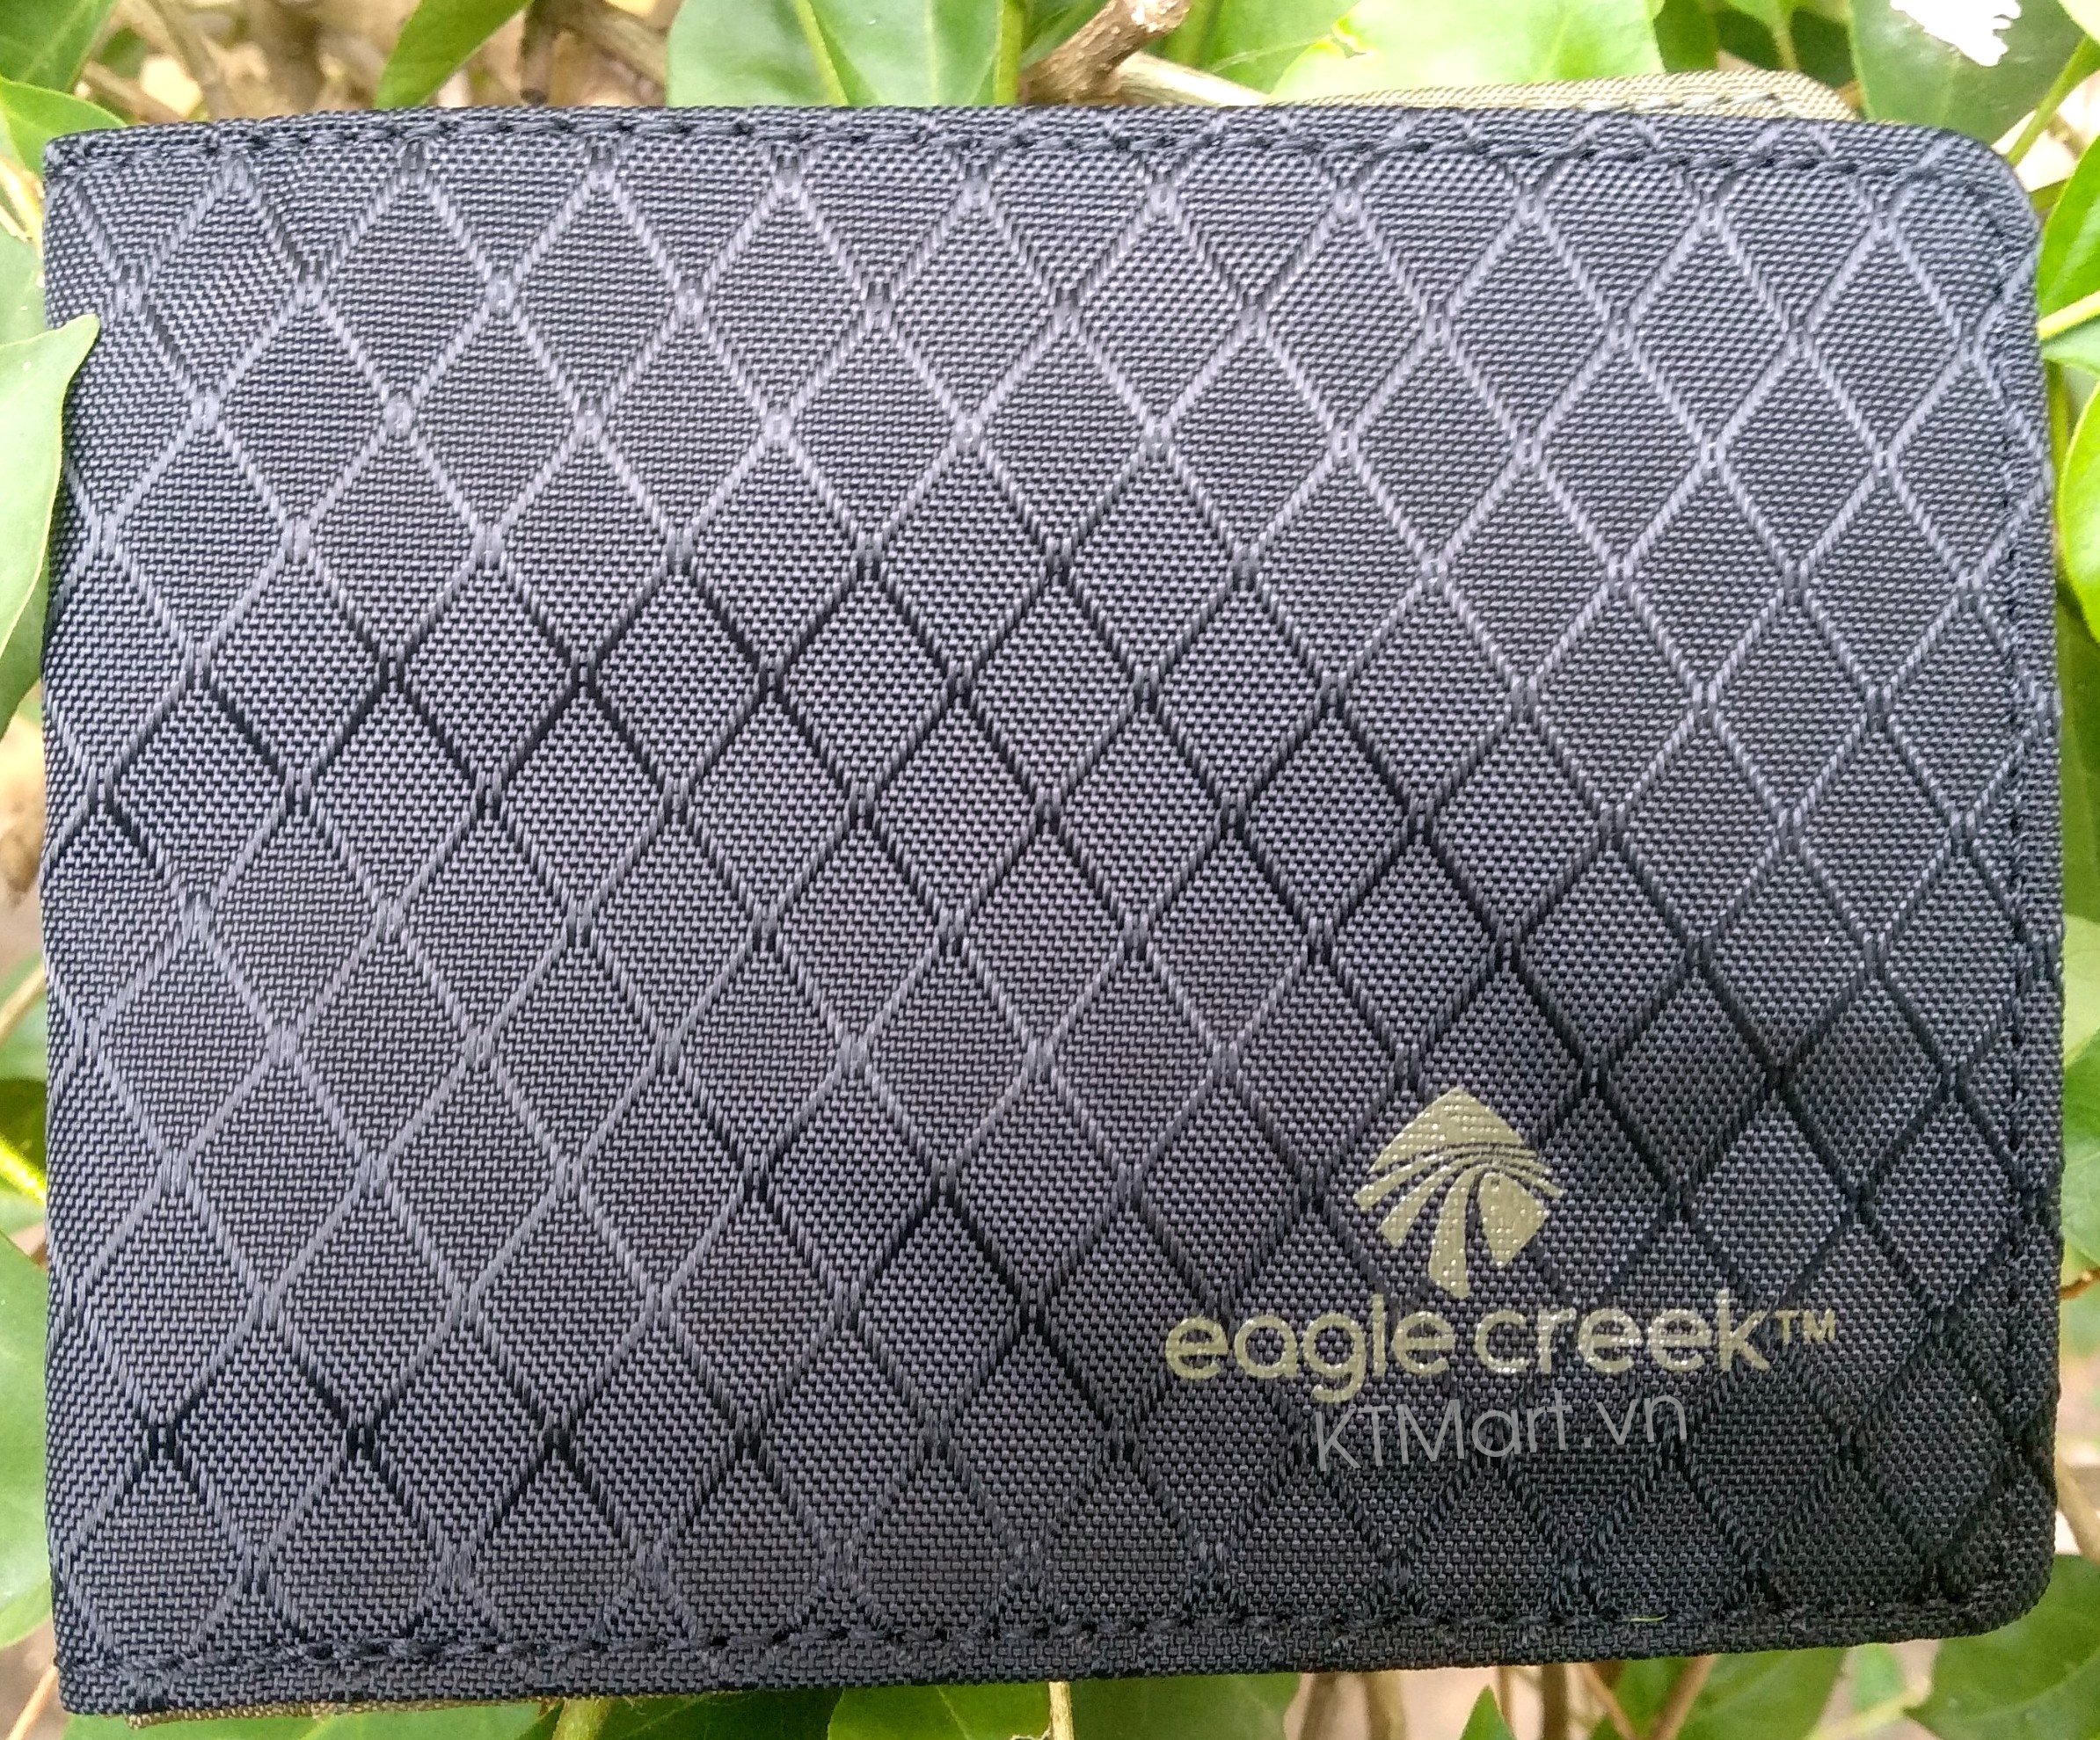 Eagle Creek RFID Bi-Fold Wallet Eagle Creek ktmart 9